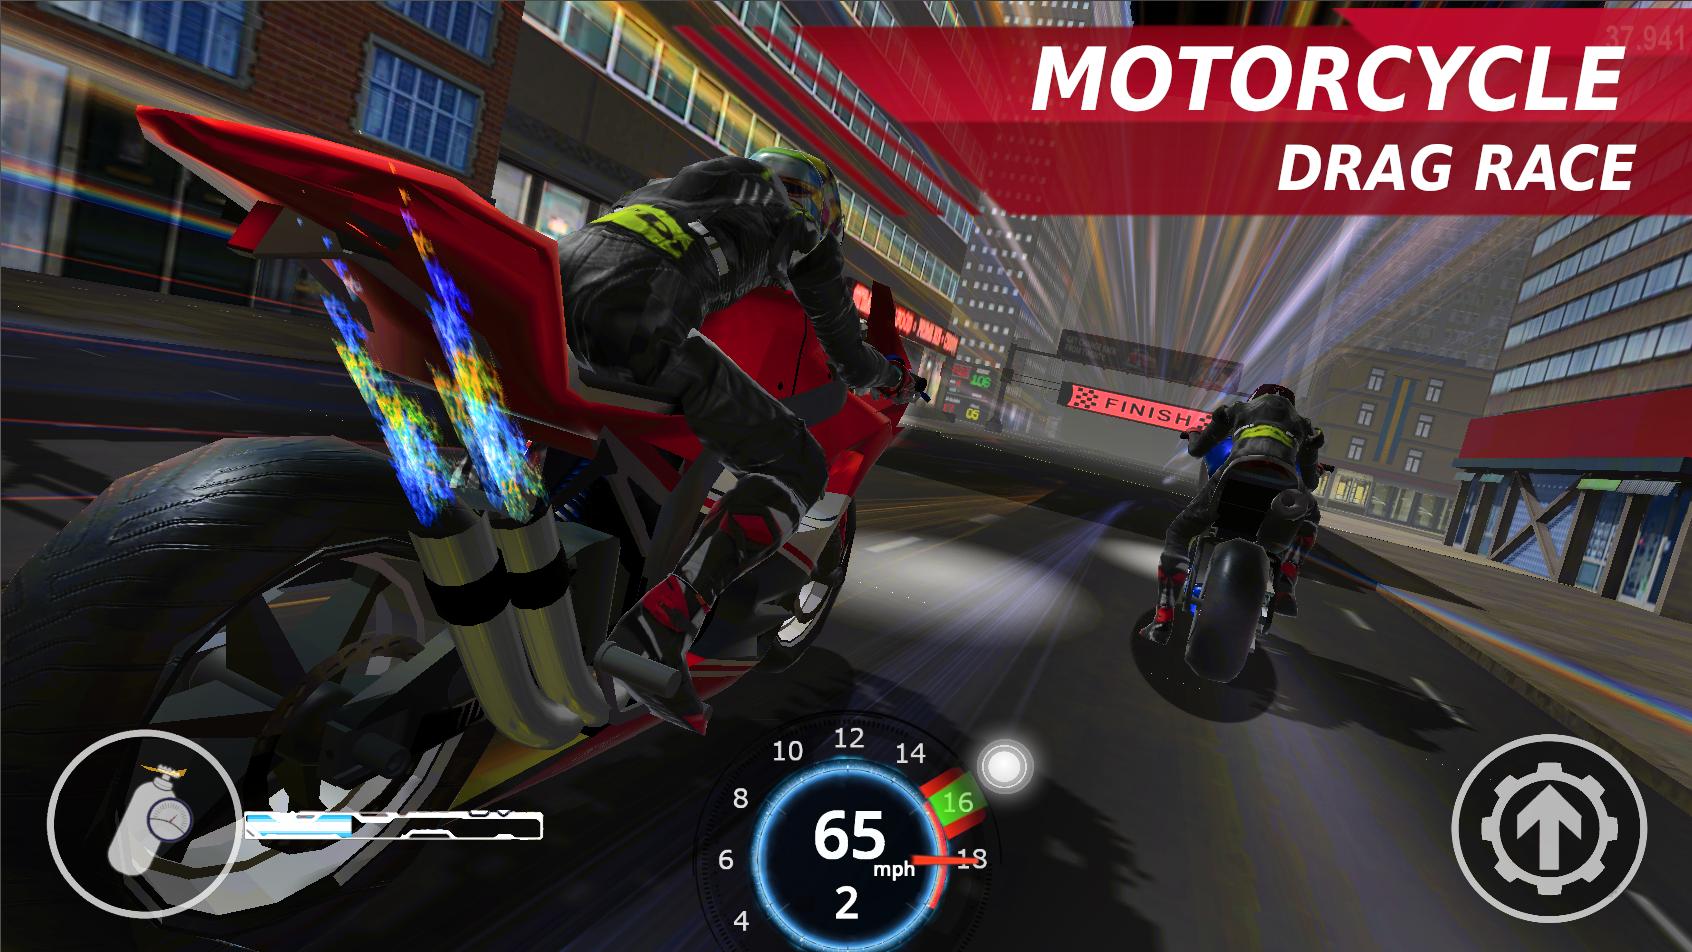 Rebel Gears Drag Bike Racing / CSR Race Moto Game 1.3.2 Screenshot 18